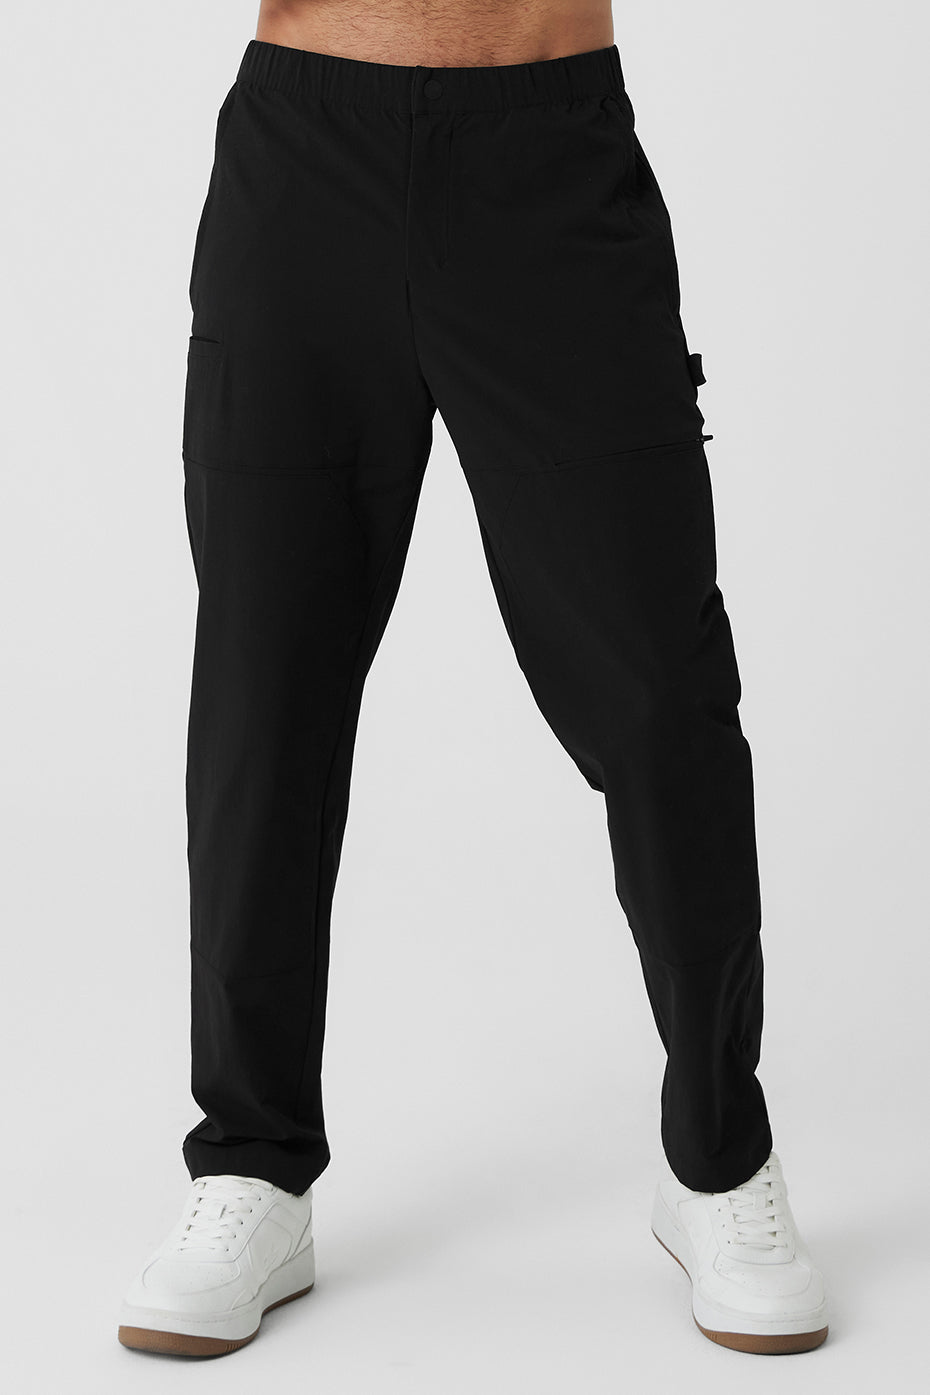 Black Conquer Revitalize Sweatpants by Alo on Sale